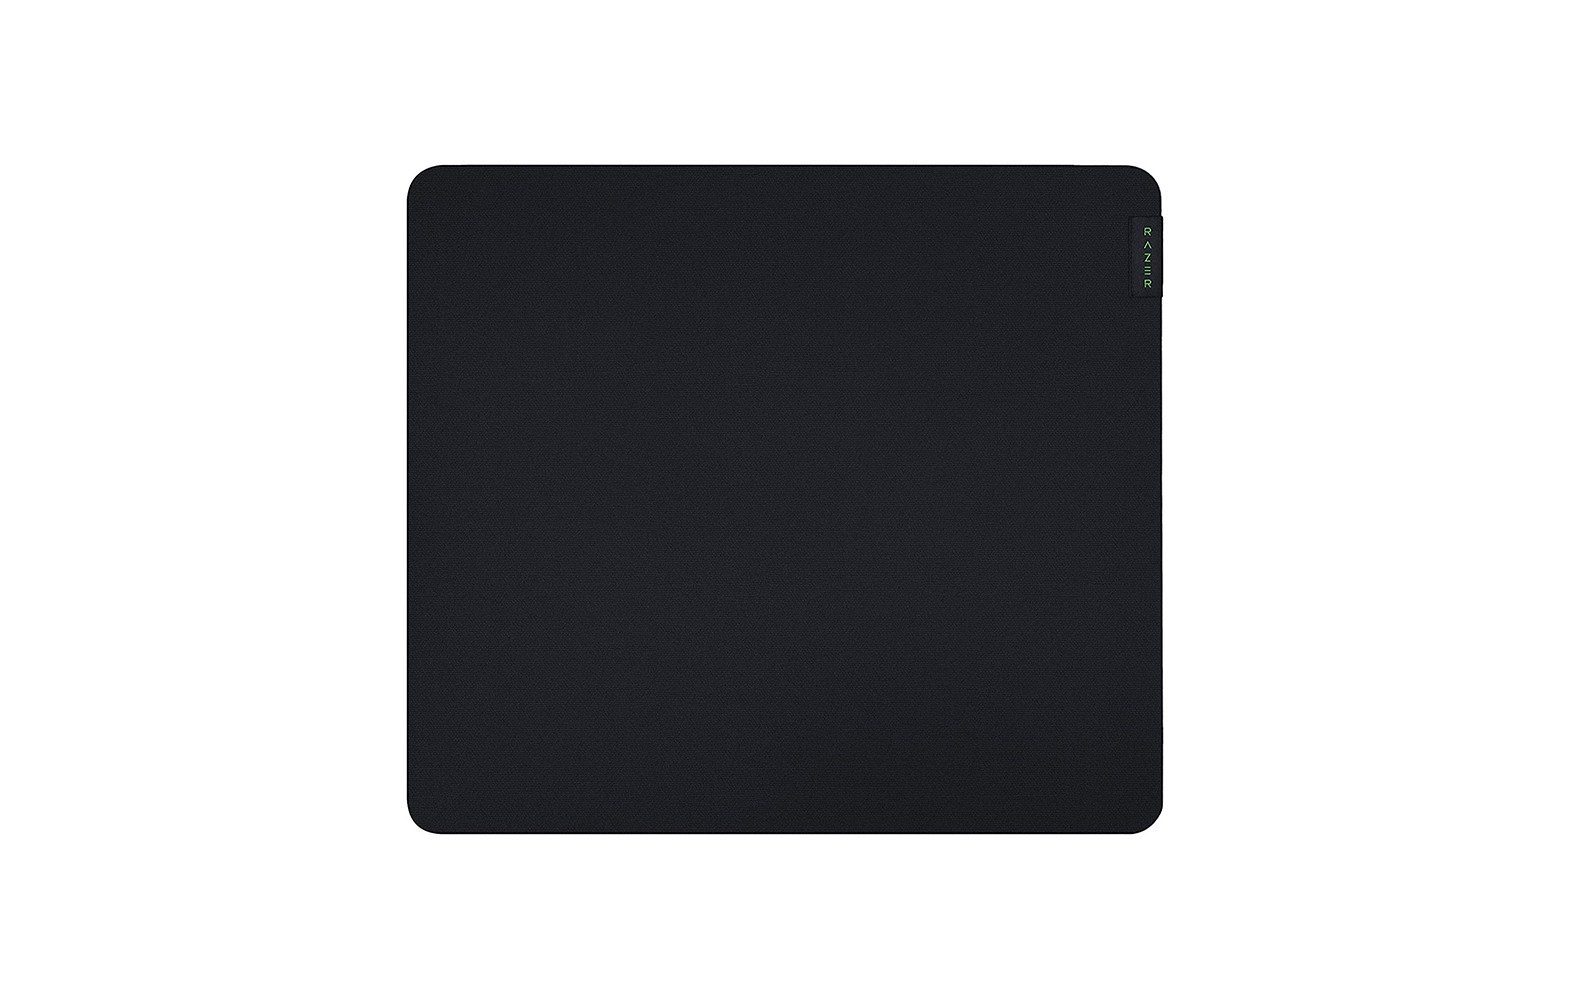 RAZER Gigantus V2 3XL mouse pad| 450x400x3mm